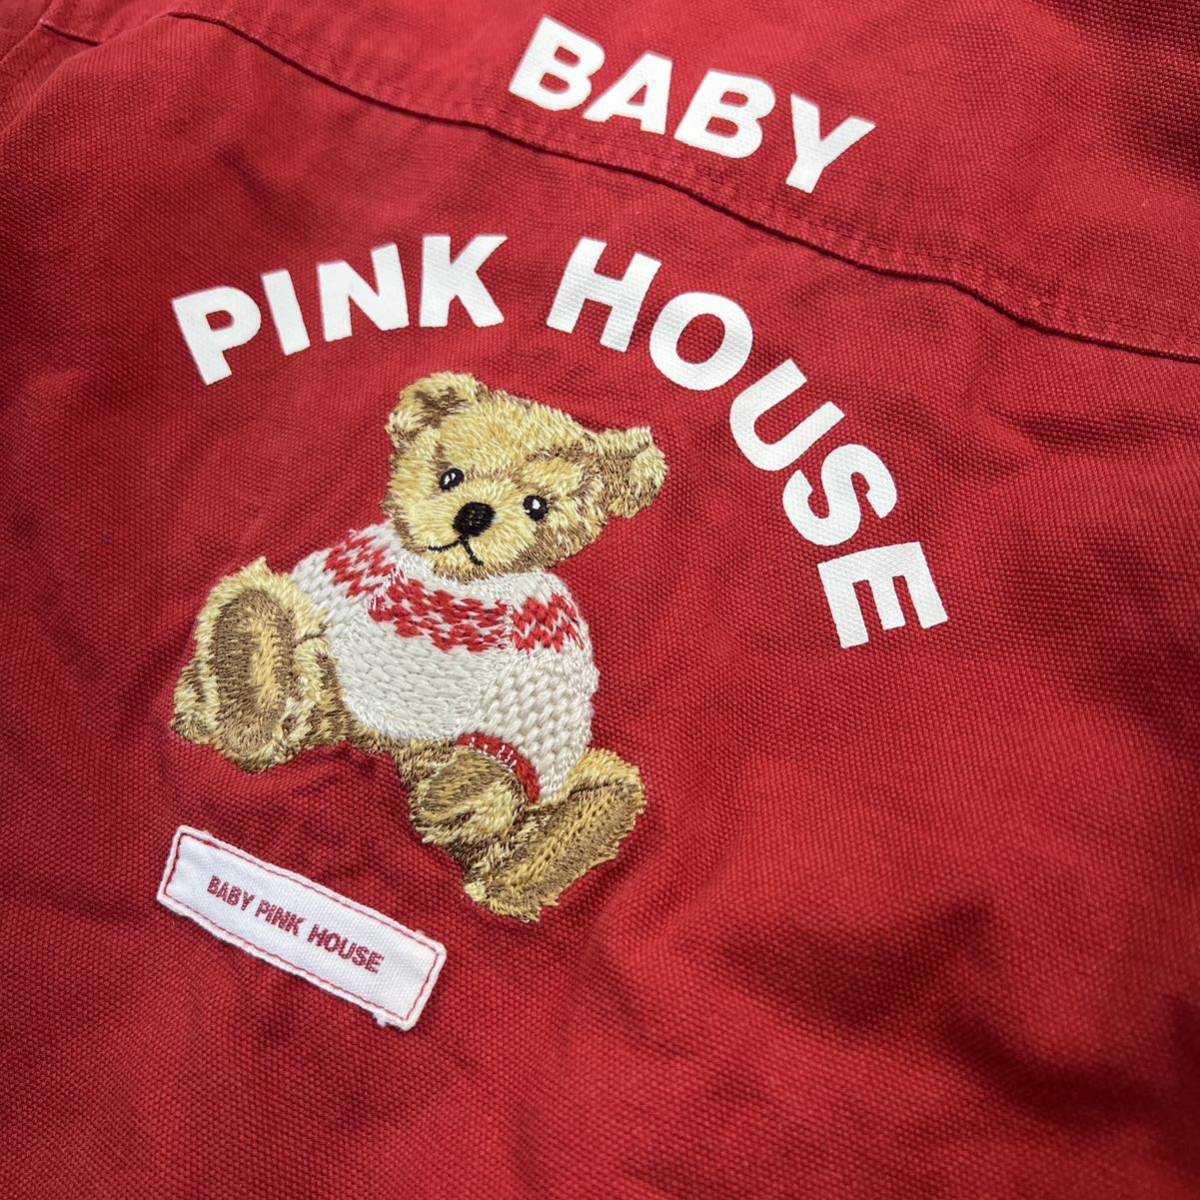  редкий BABY PINK HOUSE Old бледно-розовый house Vintage Kaneko Isao 80~100cm.. вышивка блузон 